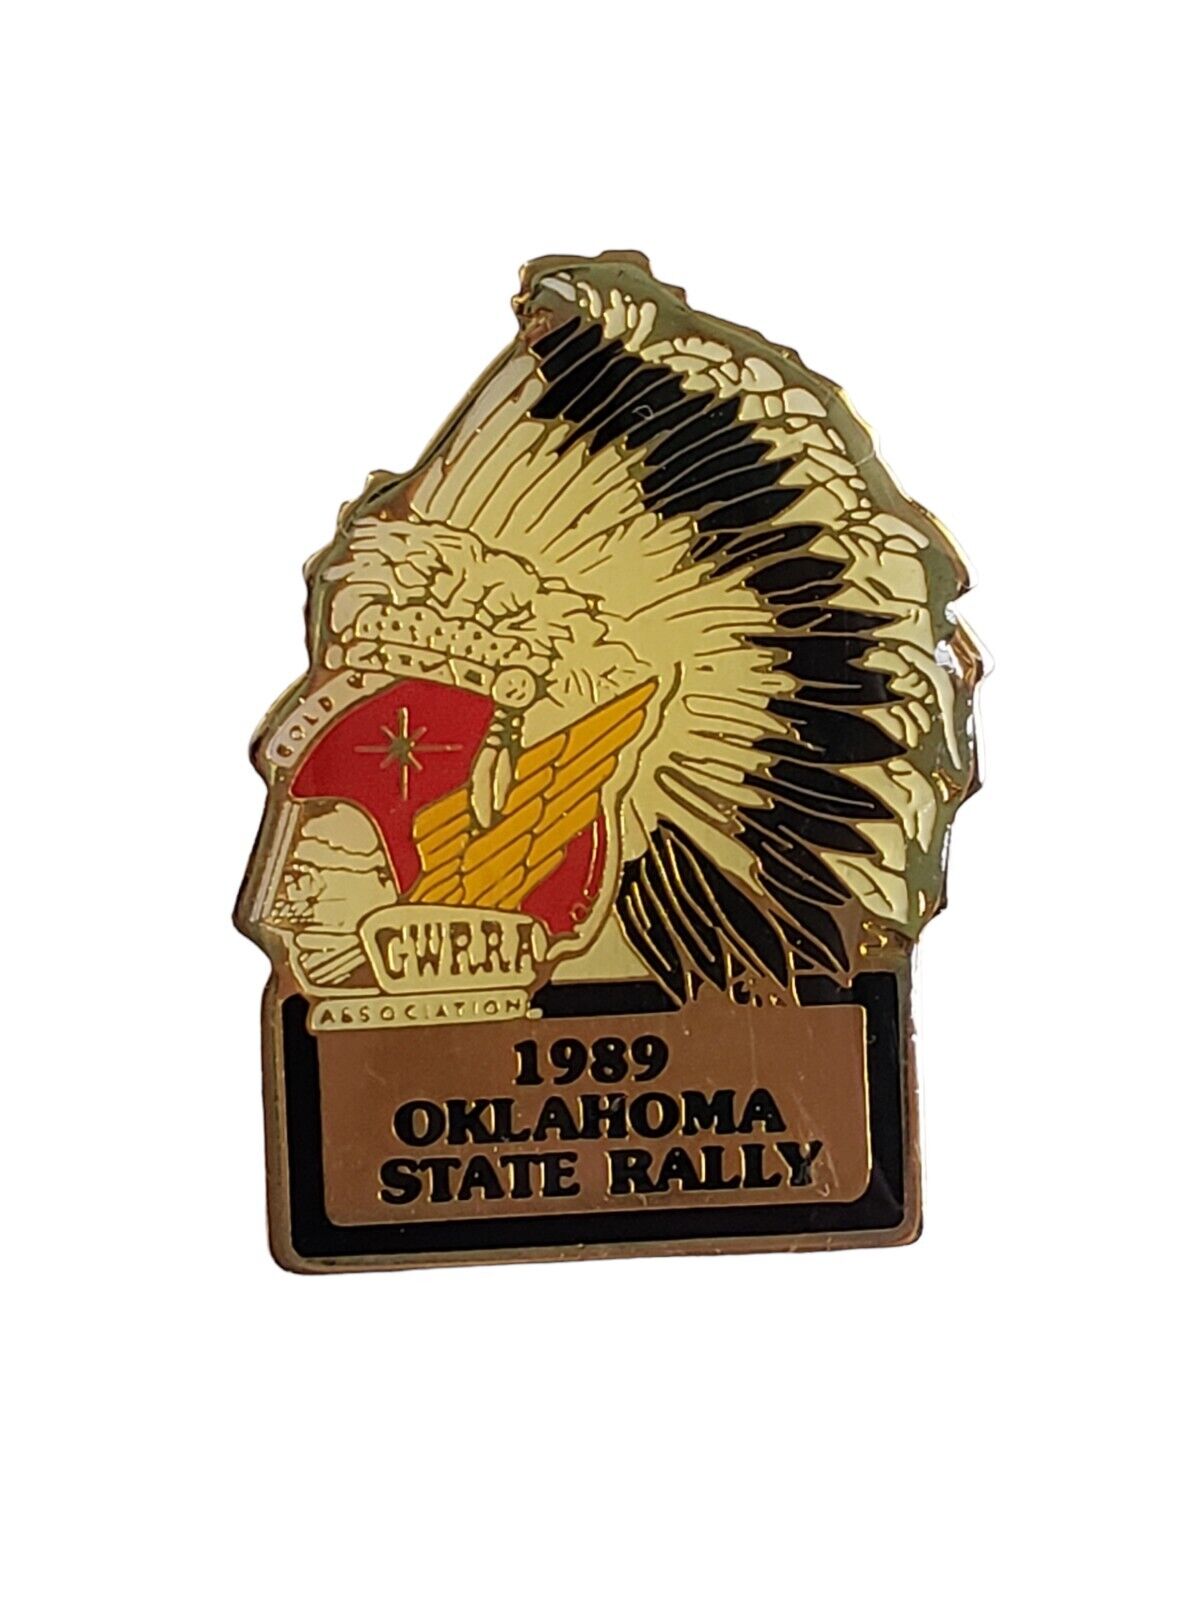 1989 Oklahoma State Rally Helmet Headdress GWRRA Gold Wing Road Riders Pin Lapel